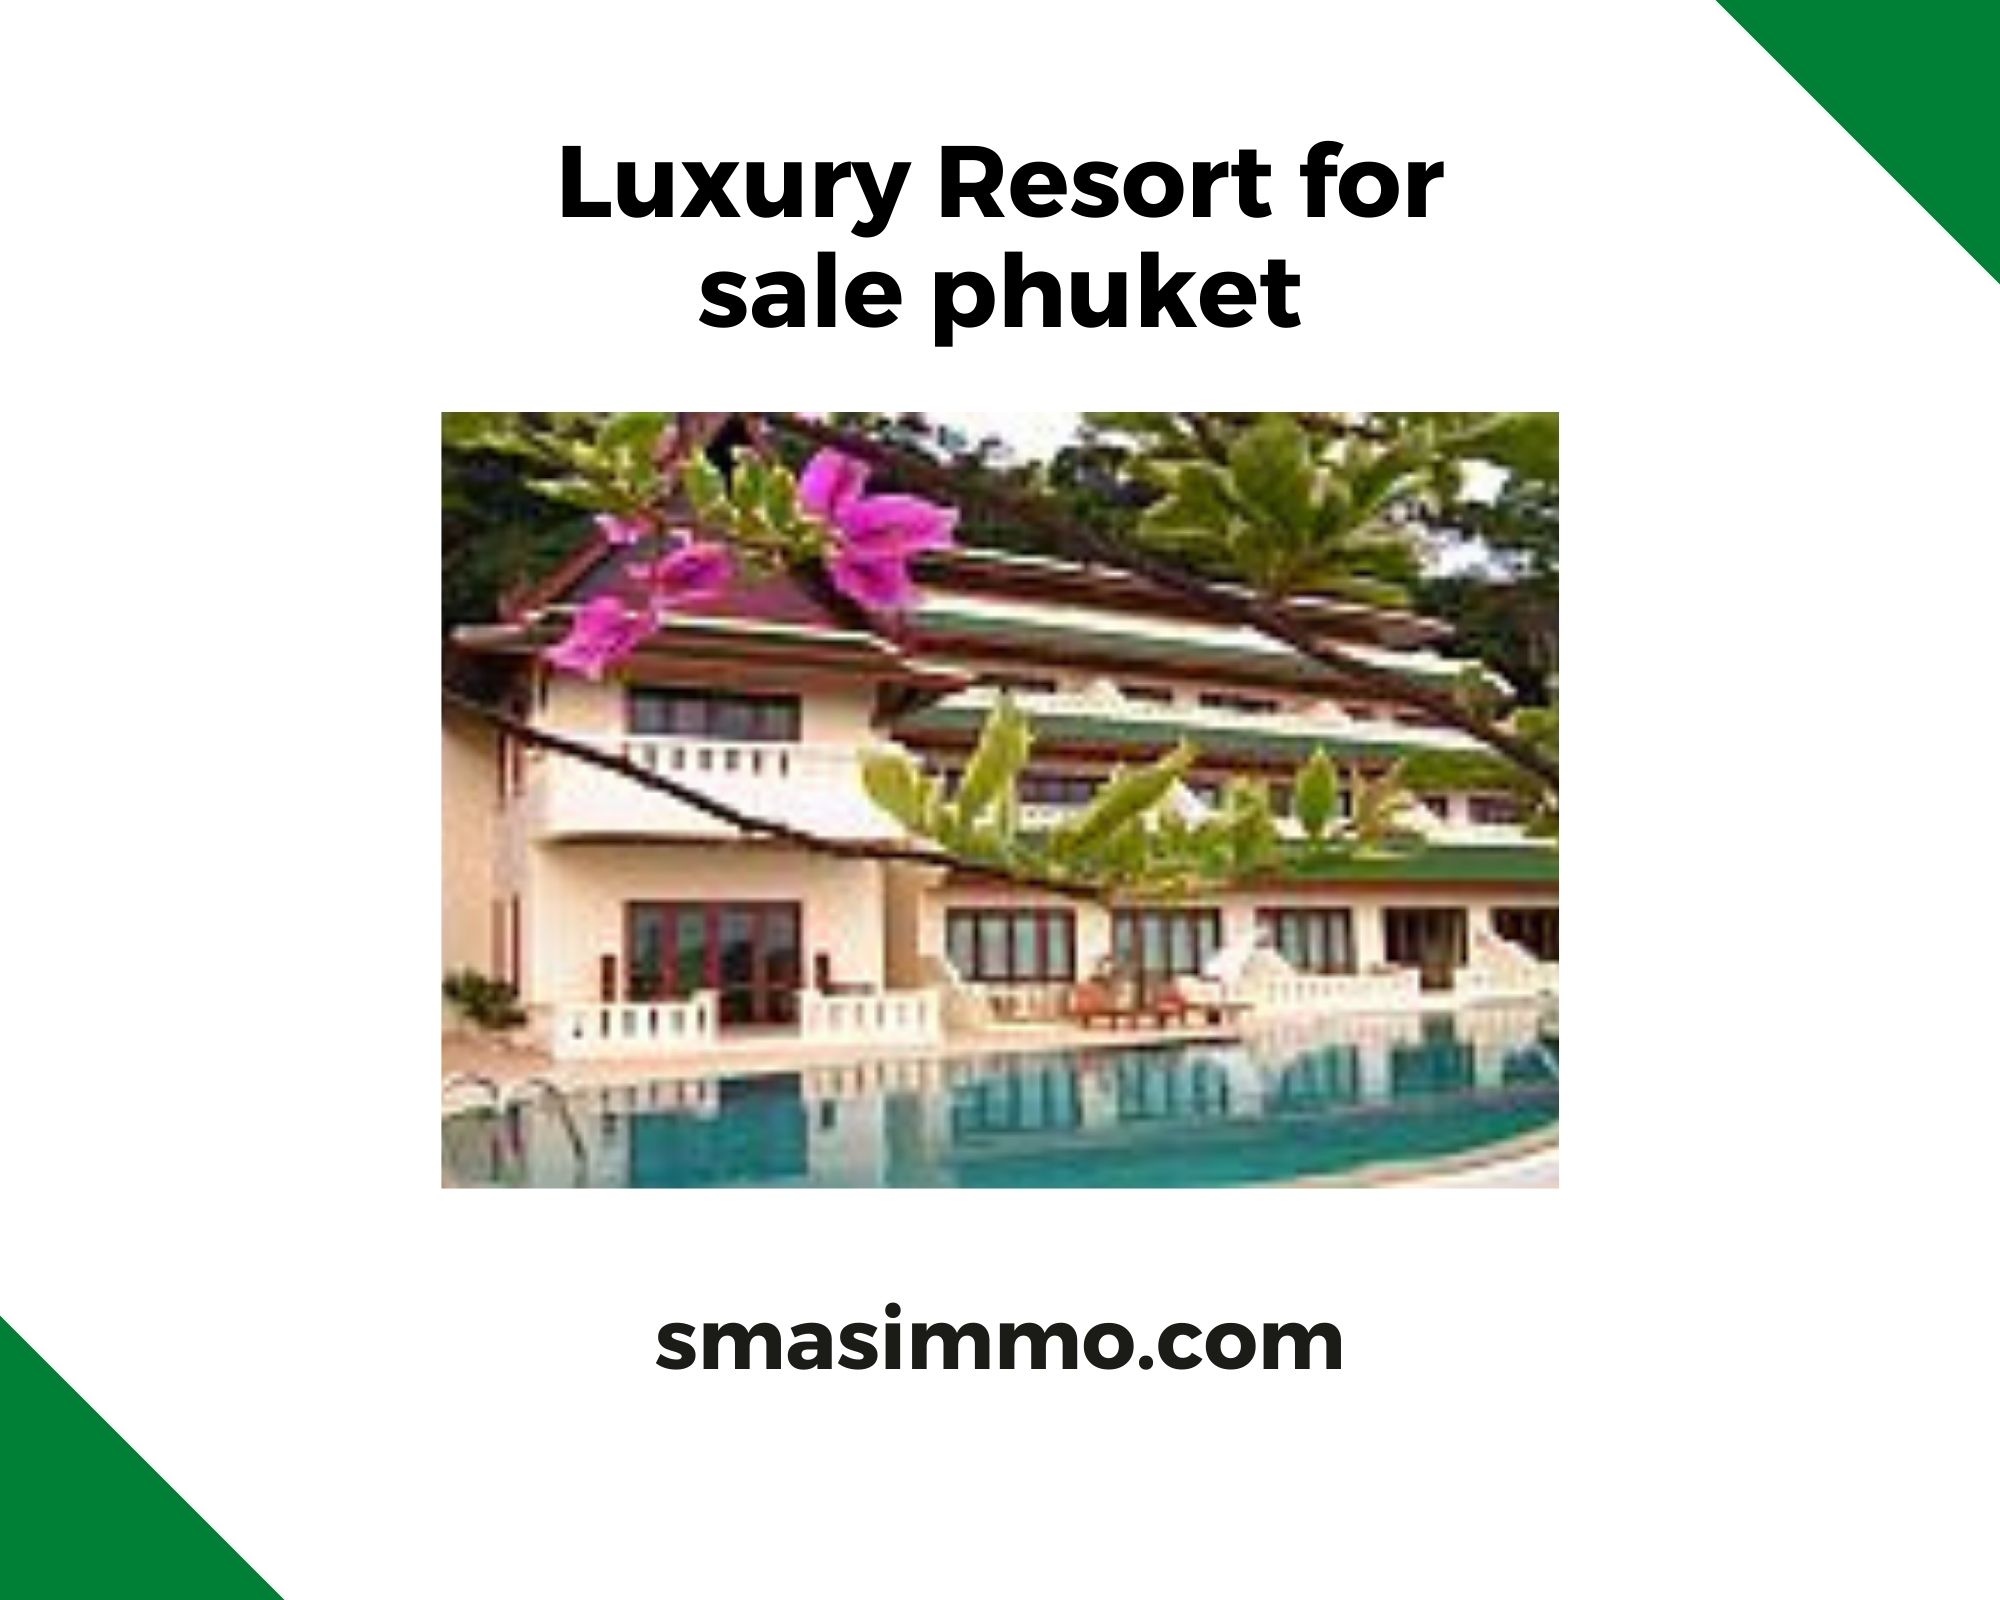 Luxury Resort for sale phuket.jpg  by smasimmo